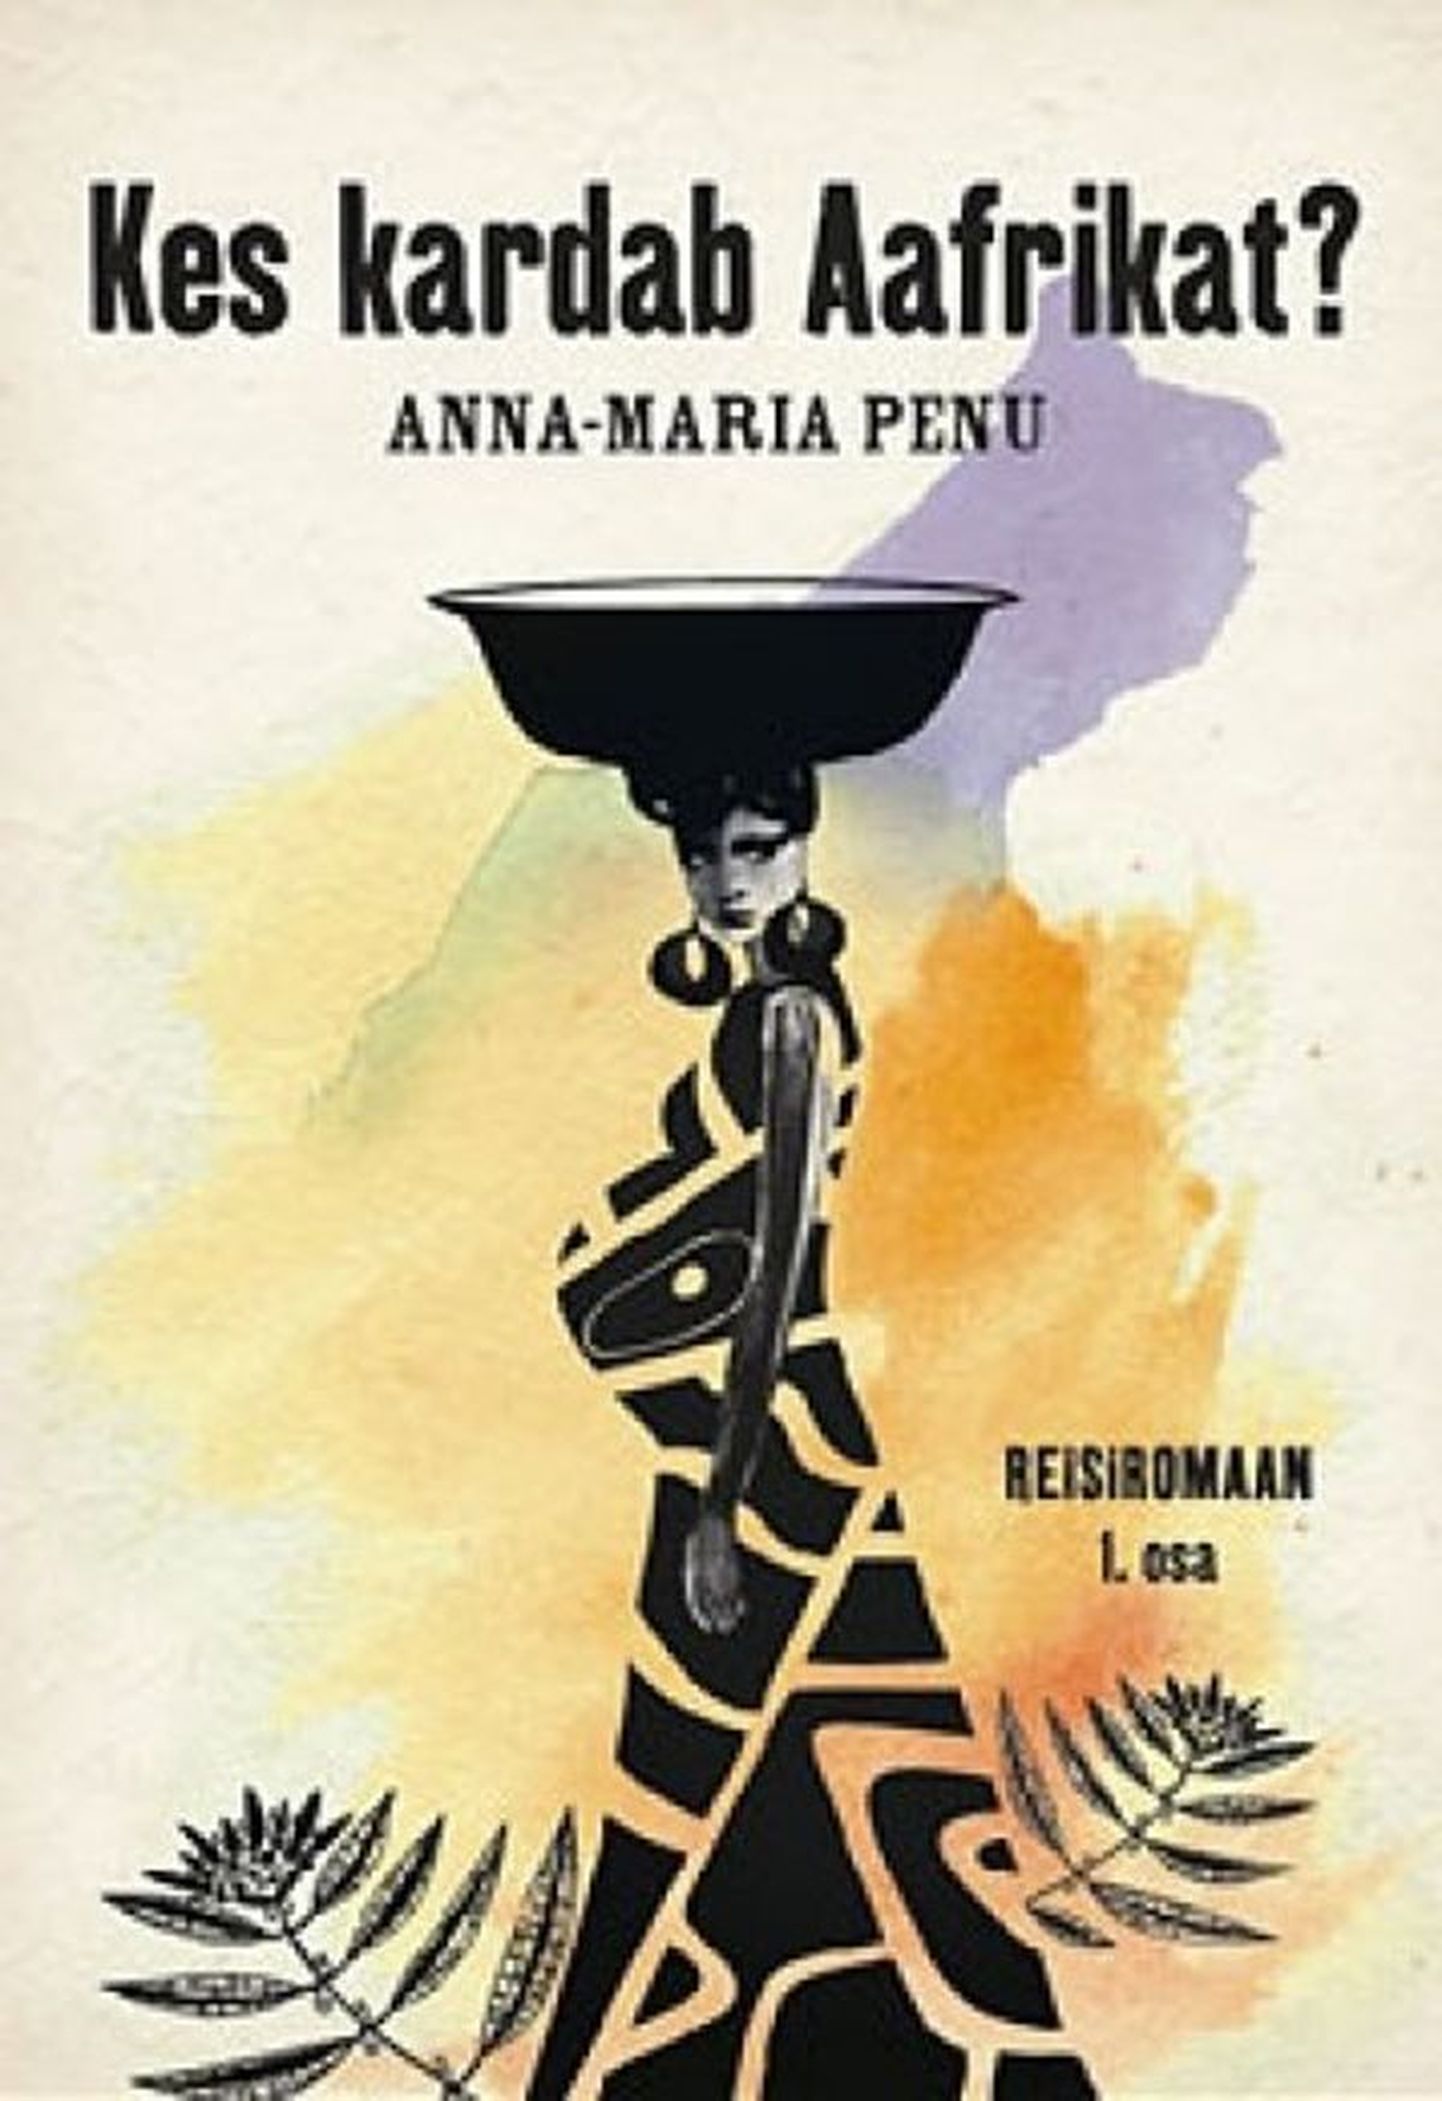 Raamat
Anna-Maria Penu
Kes kardab Aafrikat?
Reisiromaan, 
1. osa 
Petrone Print 2011, 168 lk